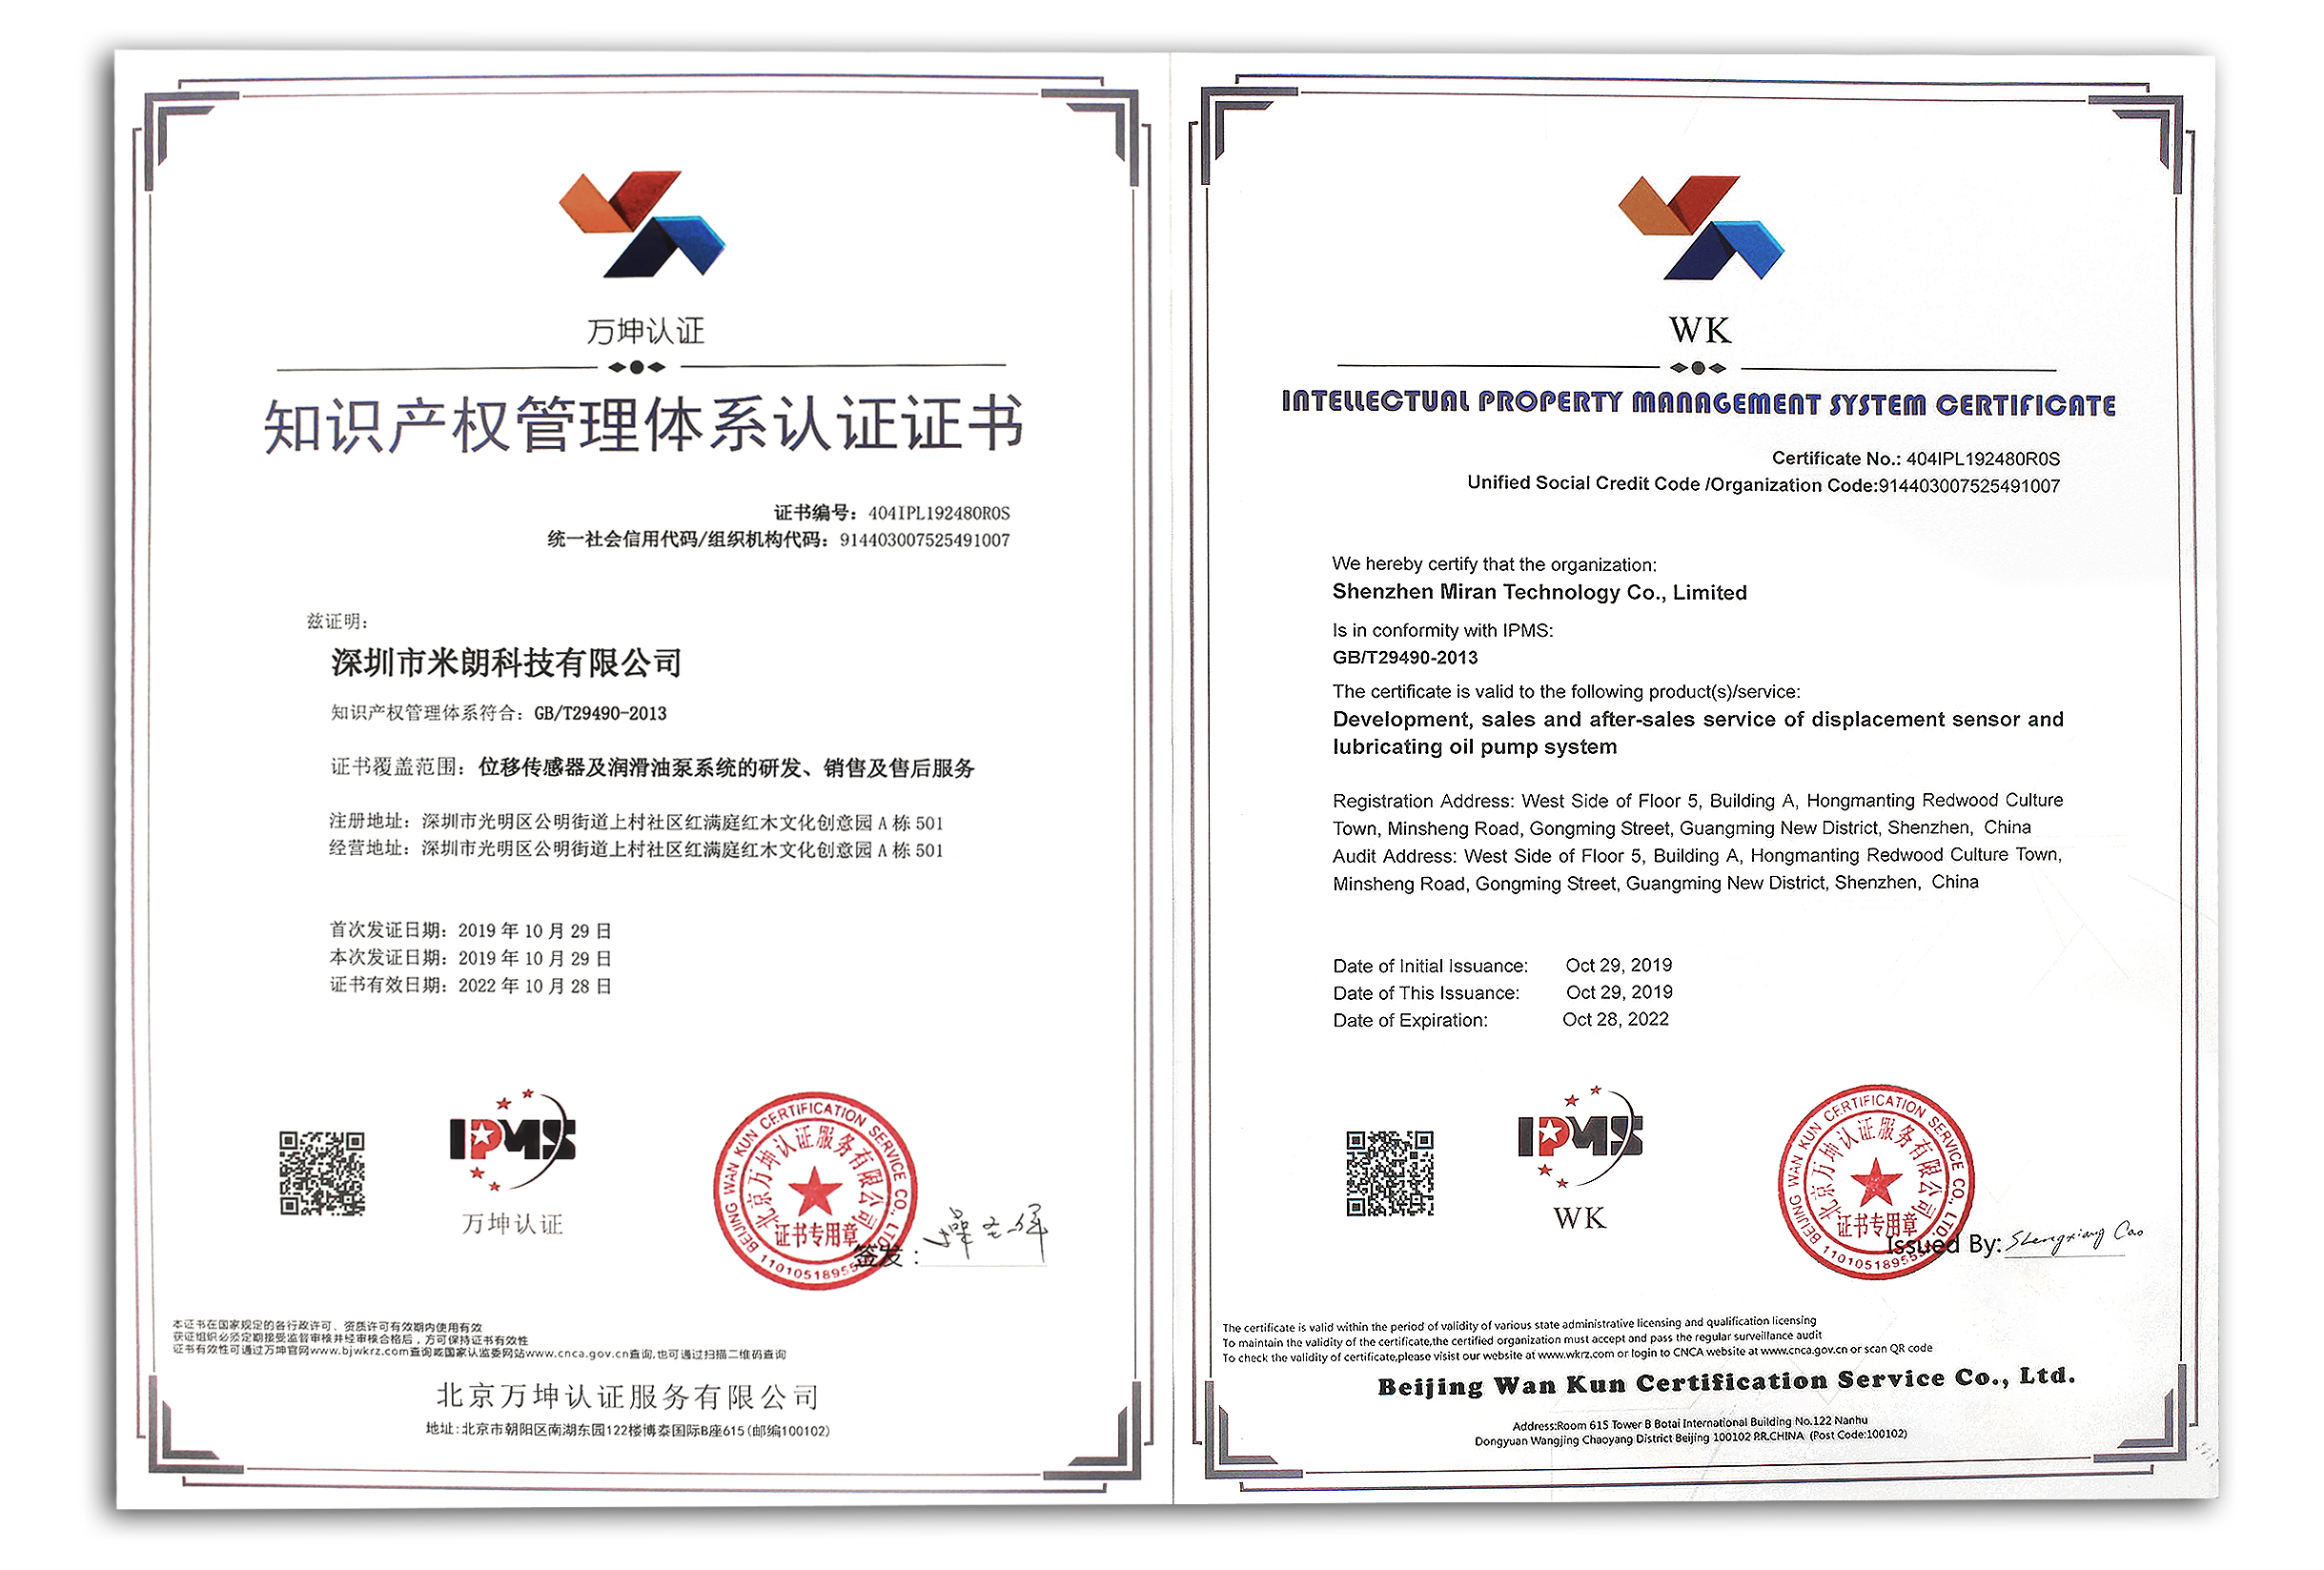 MIRAN深圳市米朗科技有限公司获得国家知识产权管理体系认证证书